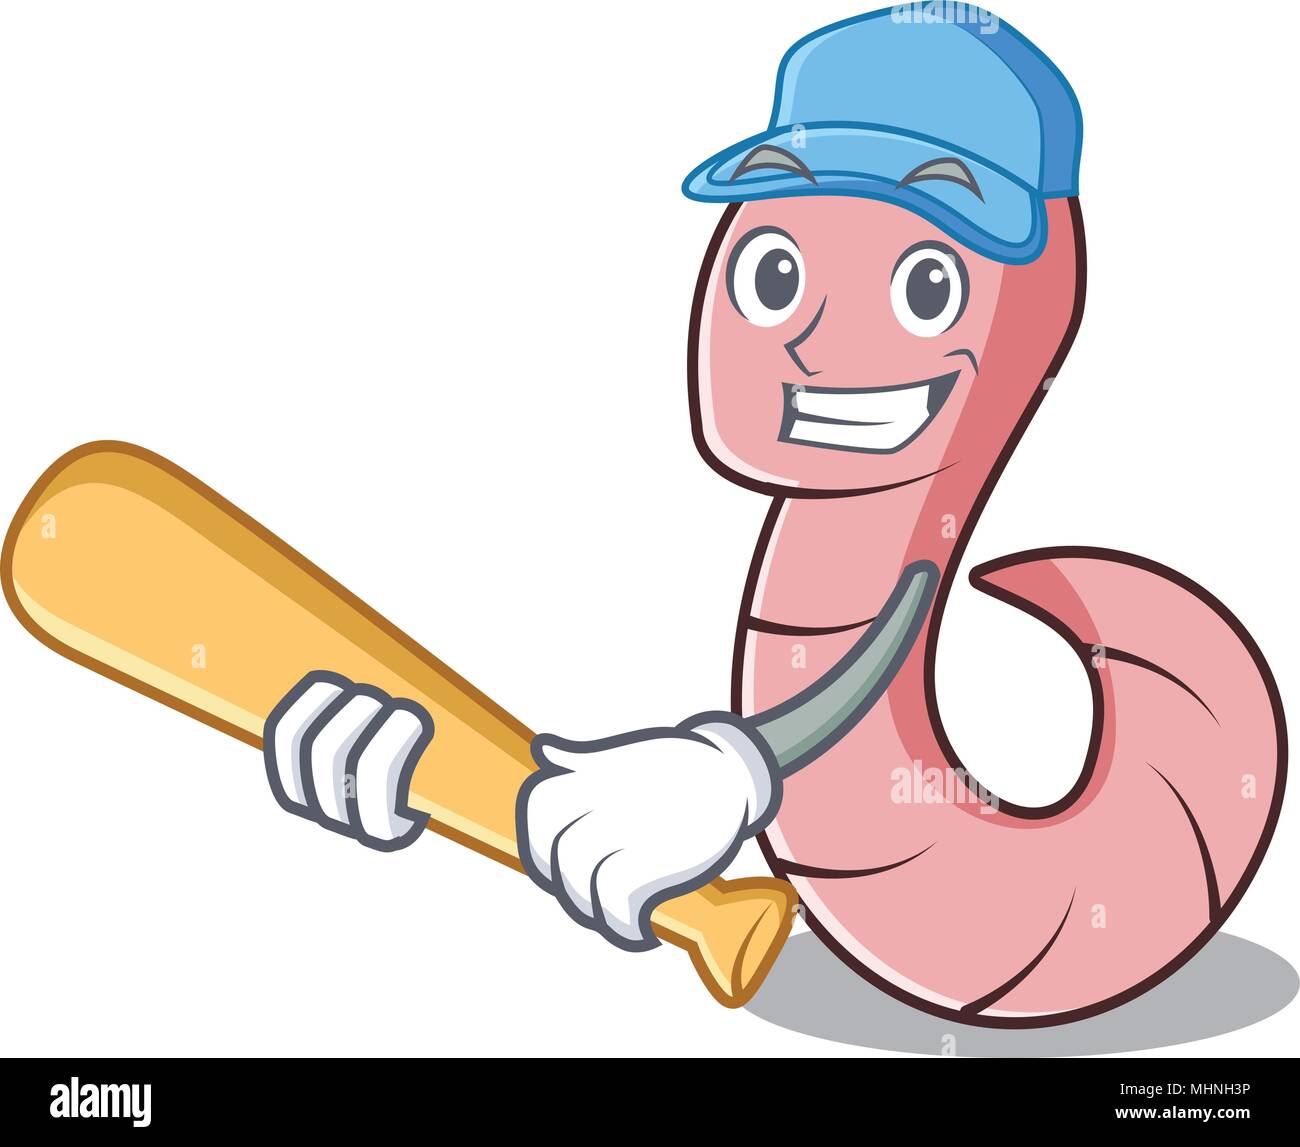 Playing baseball worm character cartoon style Stock Vector